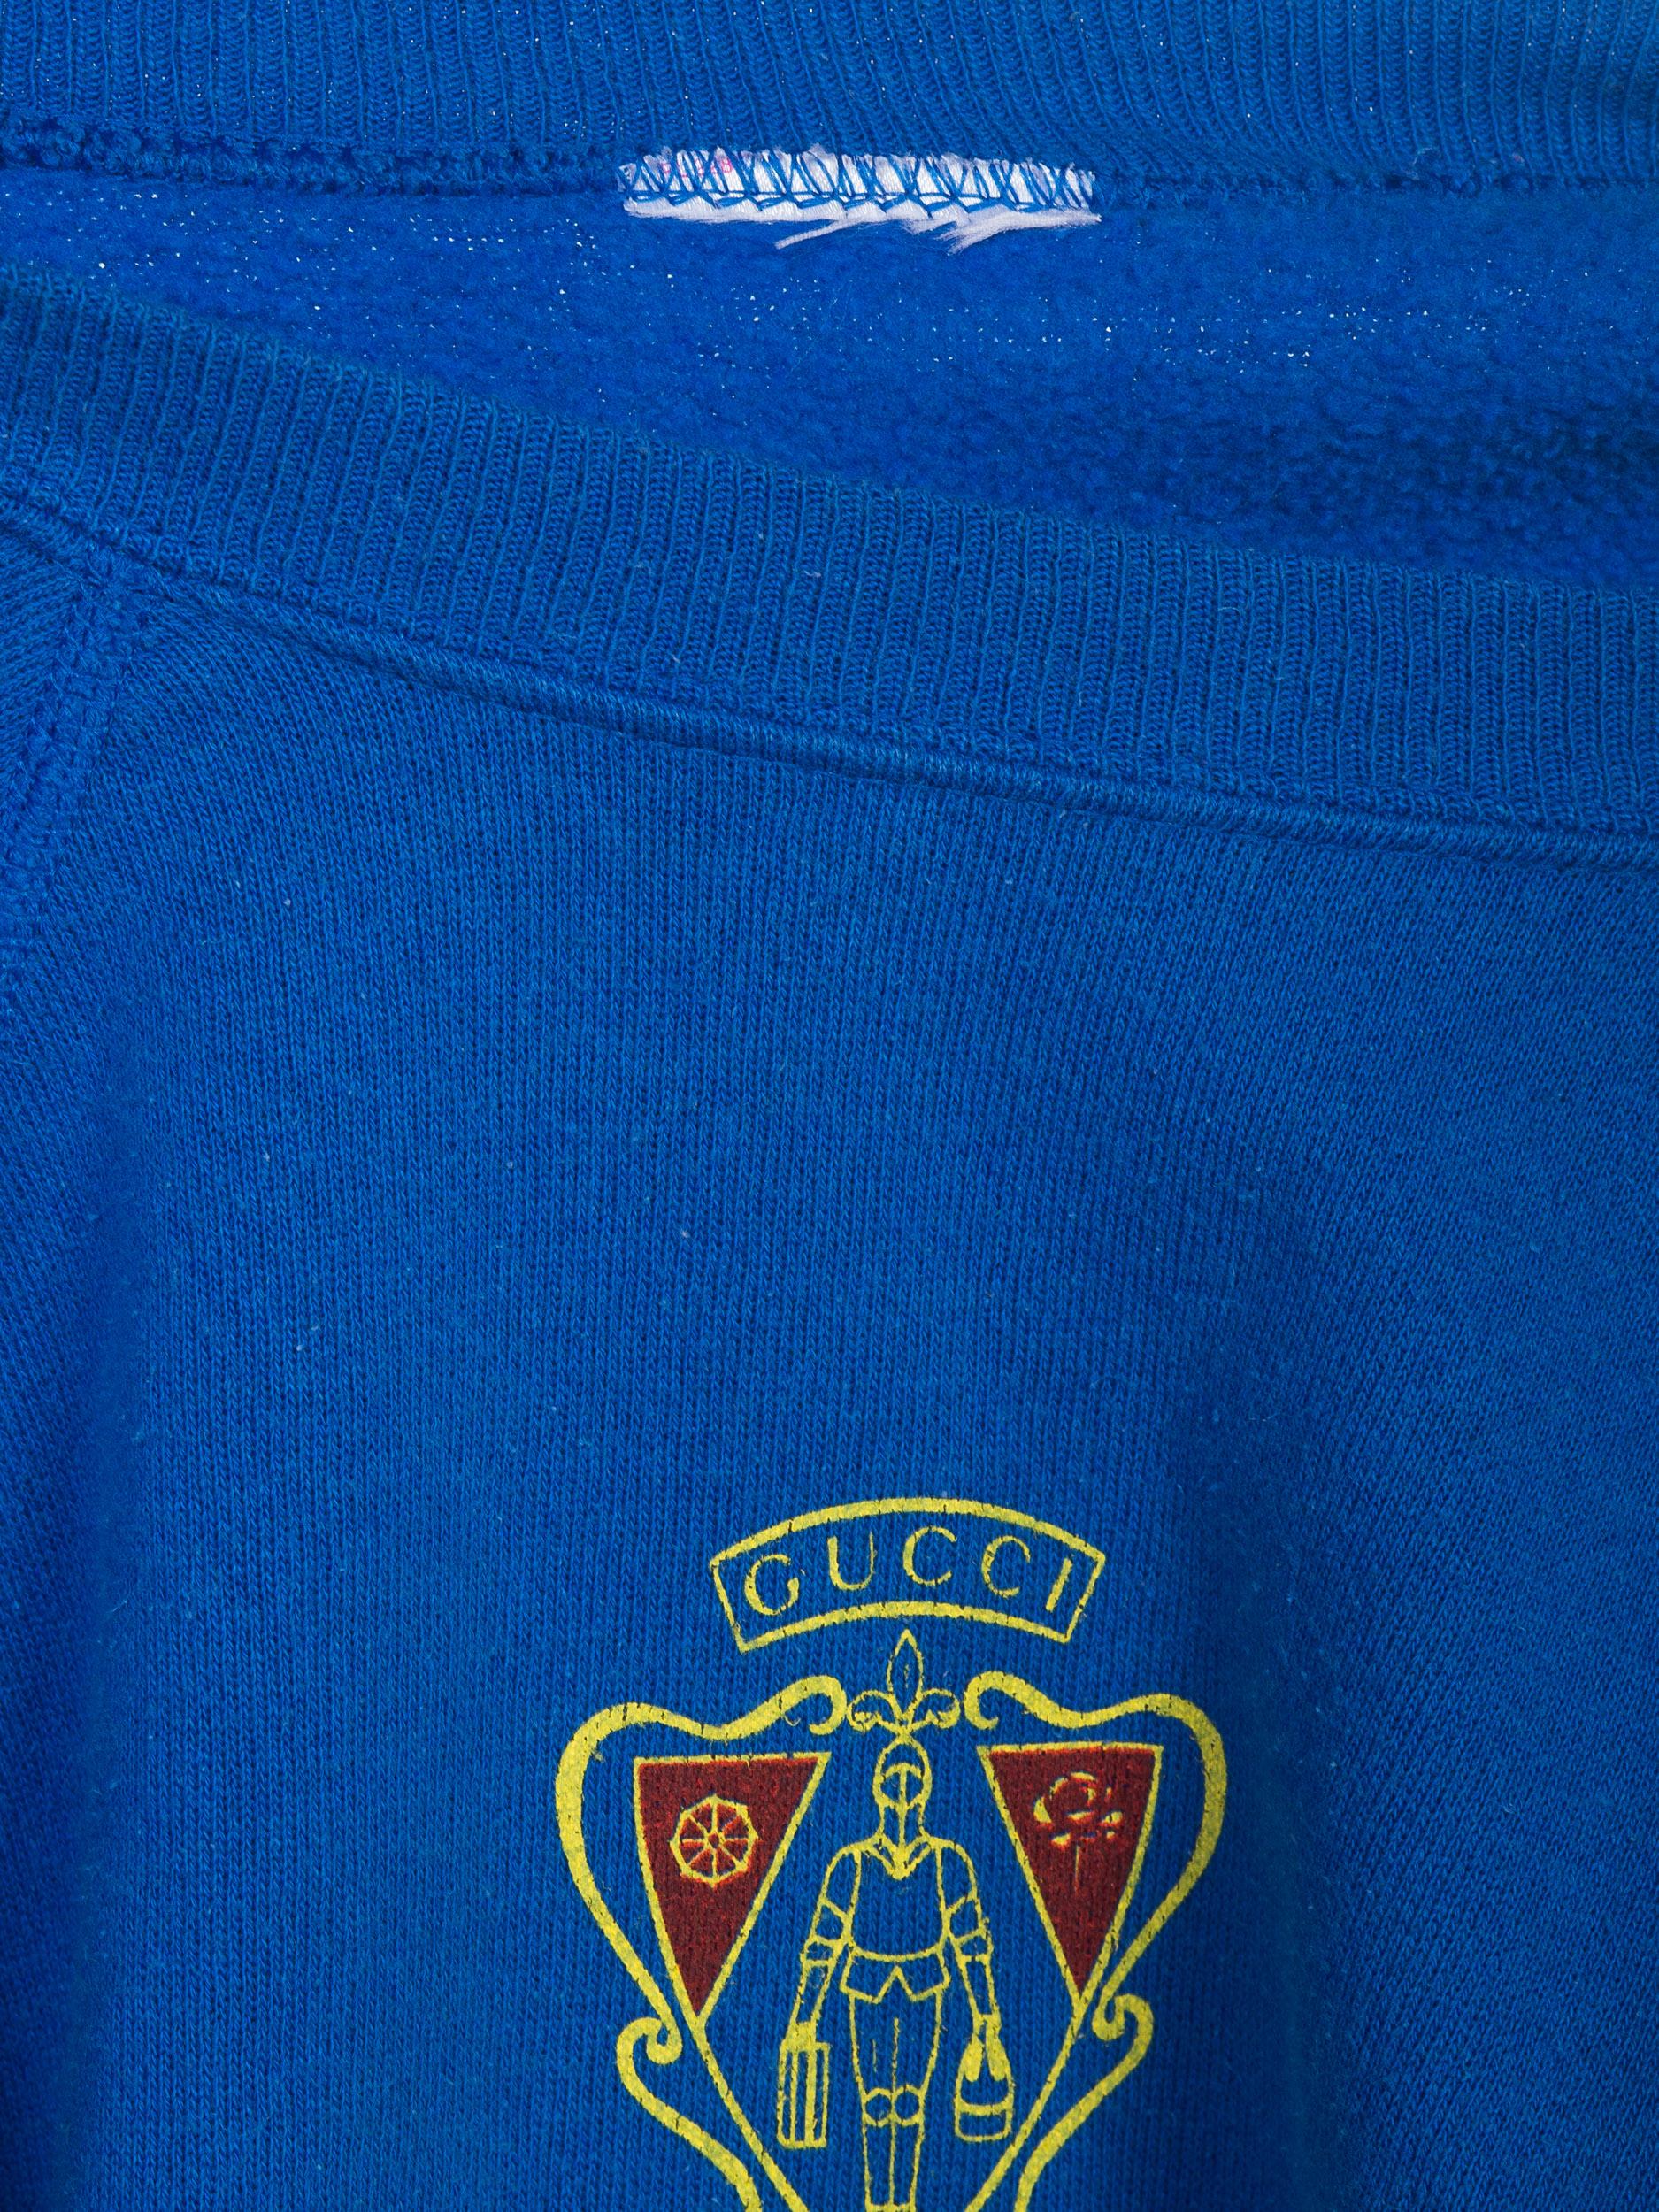 1980s Blue Bootleg Gucci Sweatshirt 1